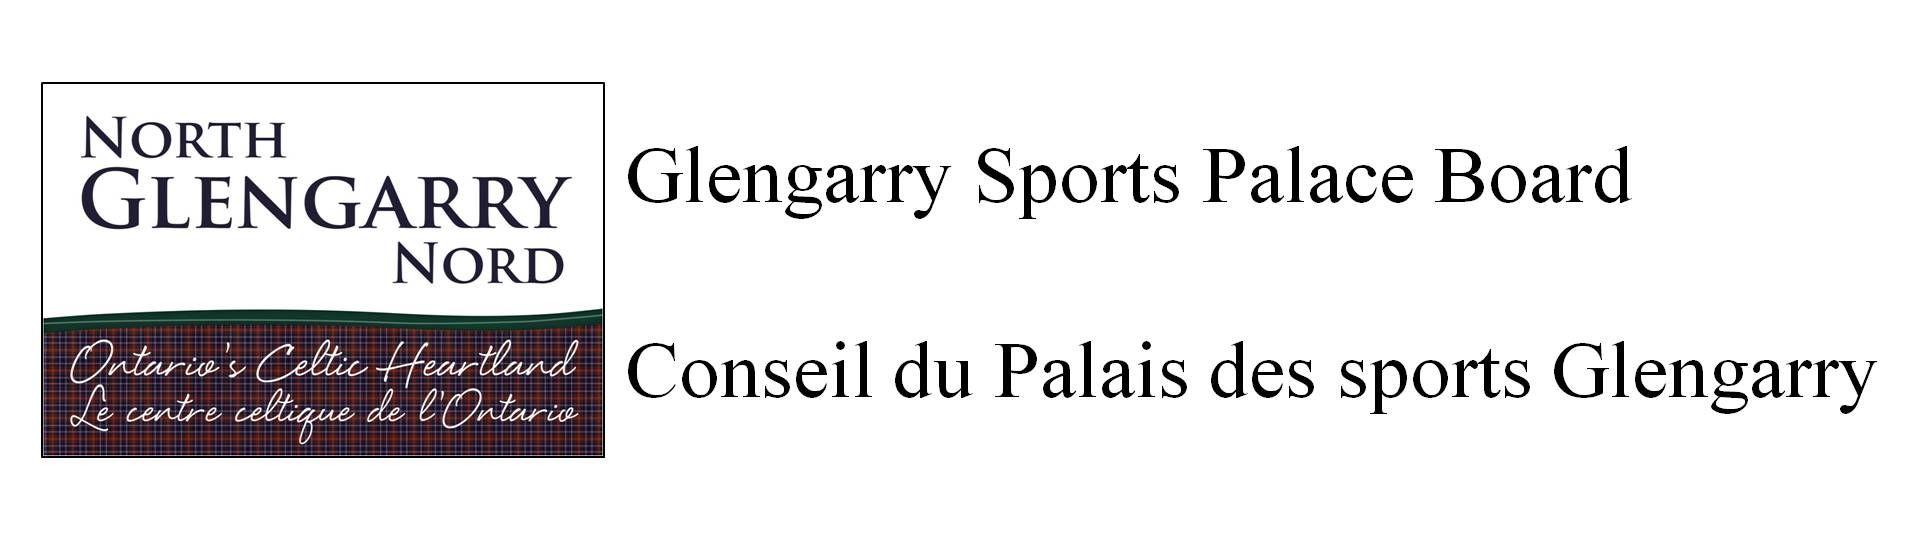 Sports Palace Logo - Glengarry Sports Palace - Township of North Glengarry